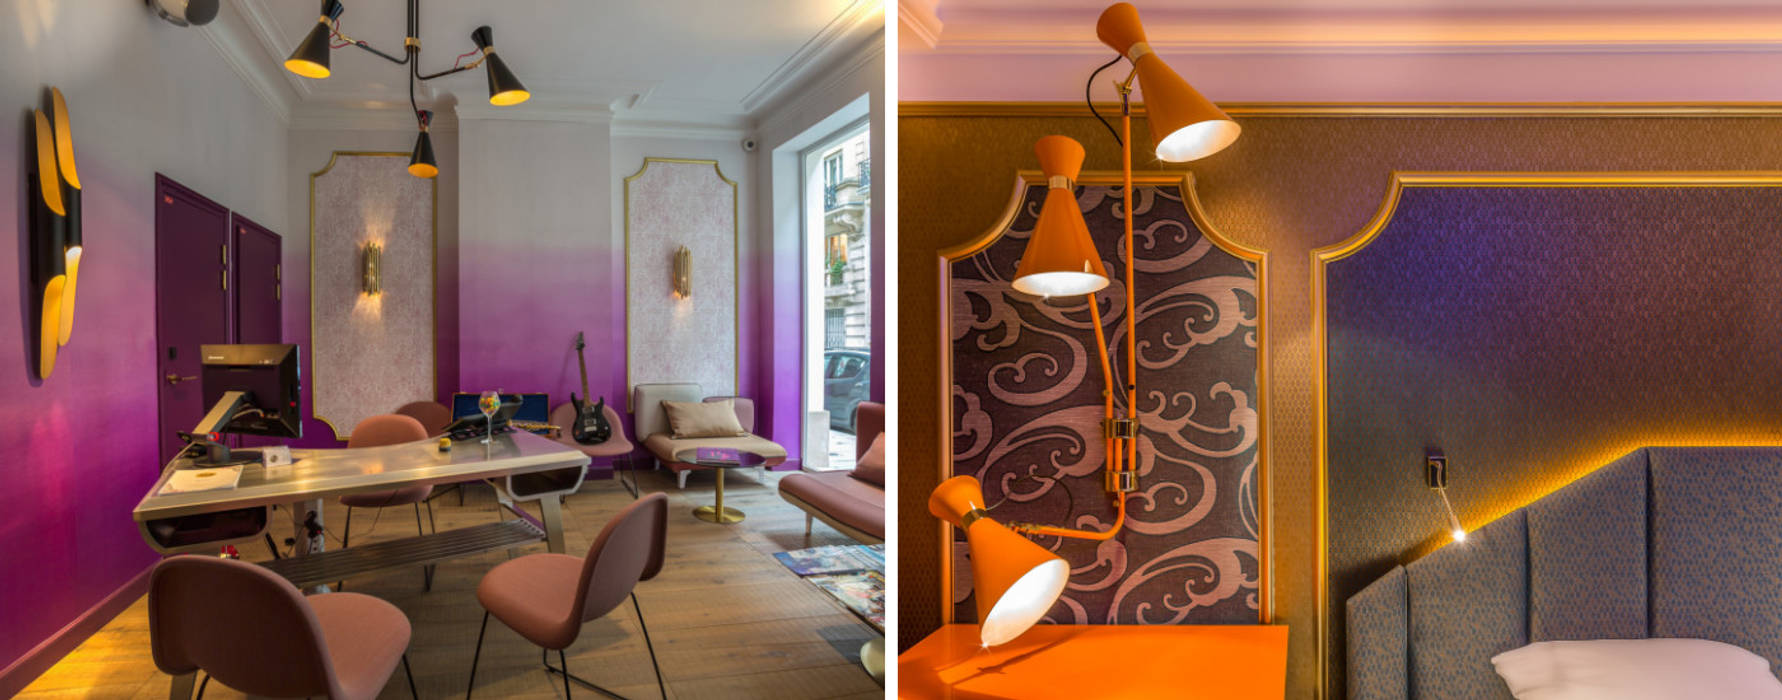 Idol Hotel, Paris DelightFULL Gewerbeflächen Kupfer/Bronze/Messing Hotels